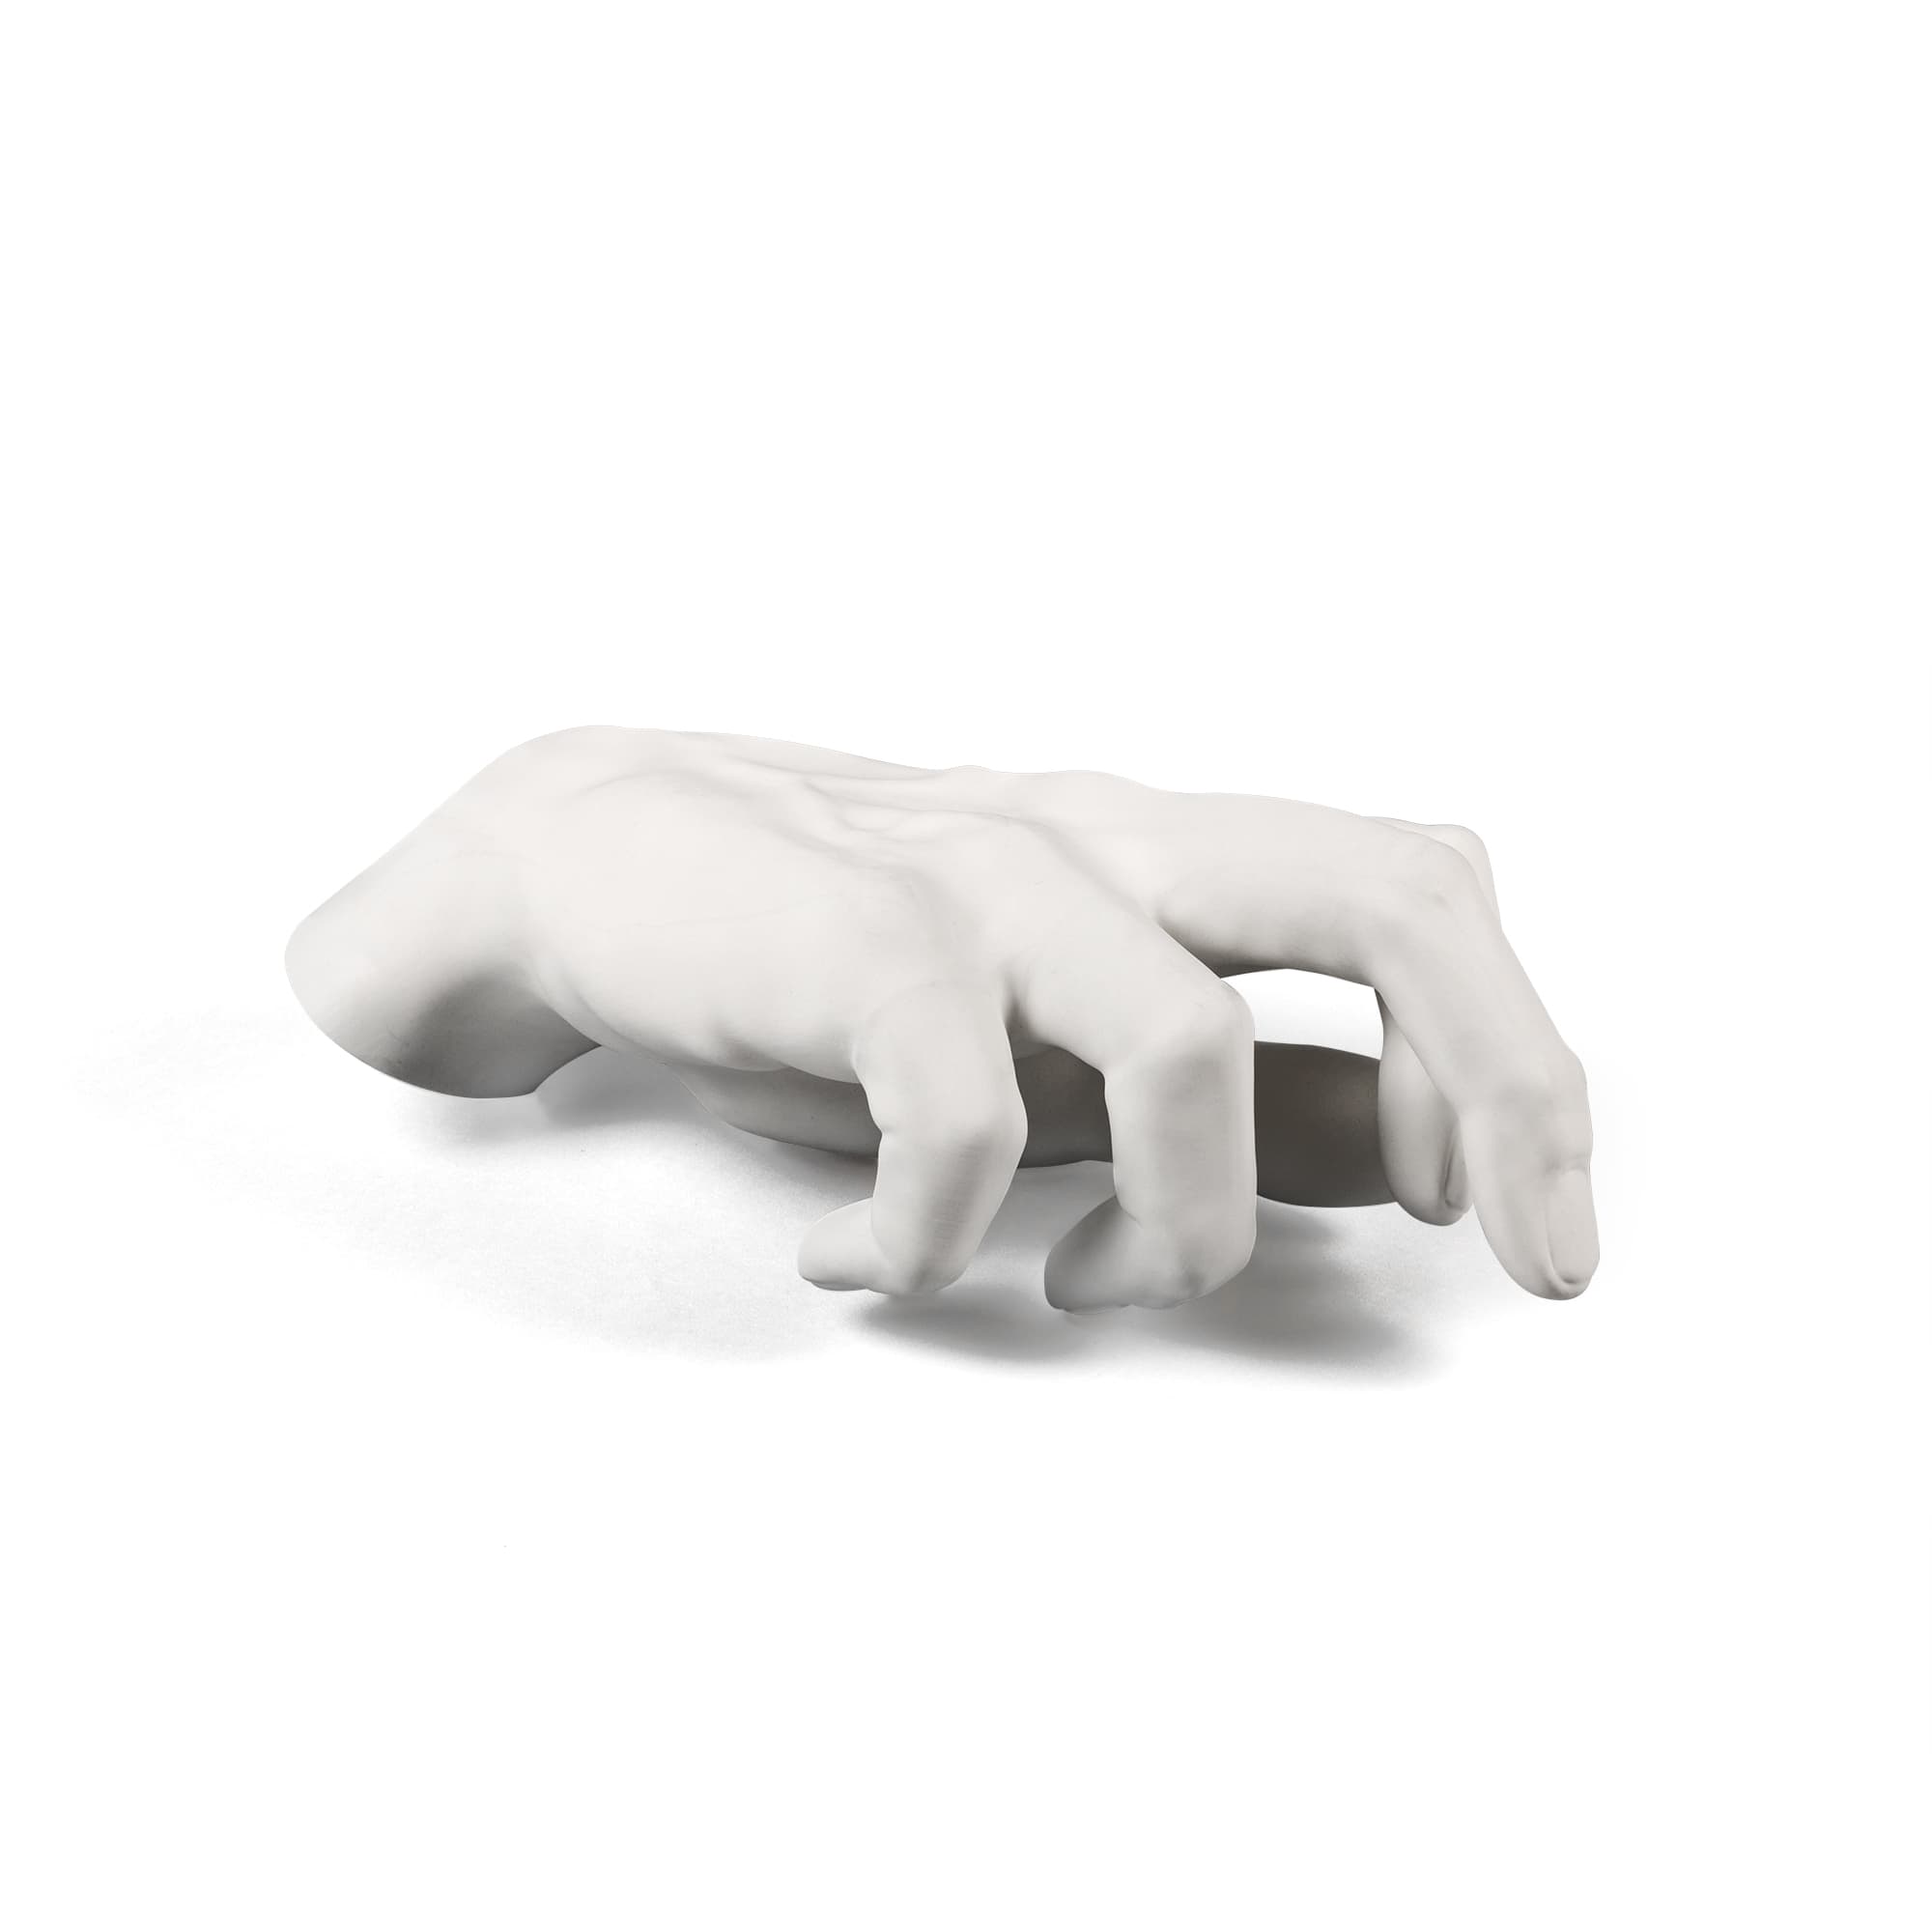 Porcelain Man Hand- "Memorabilia Mvsevm"